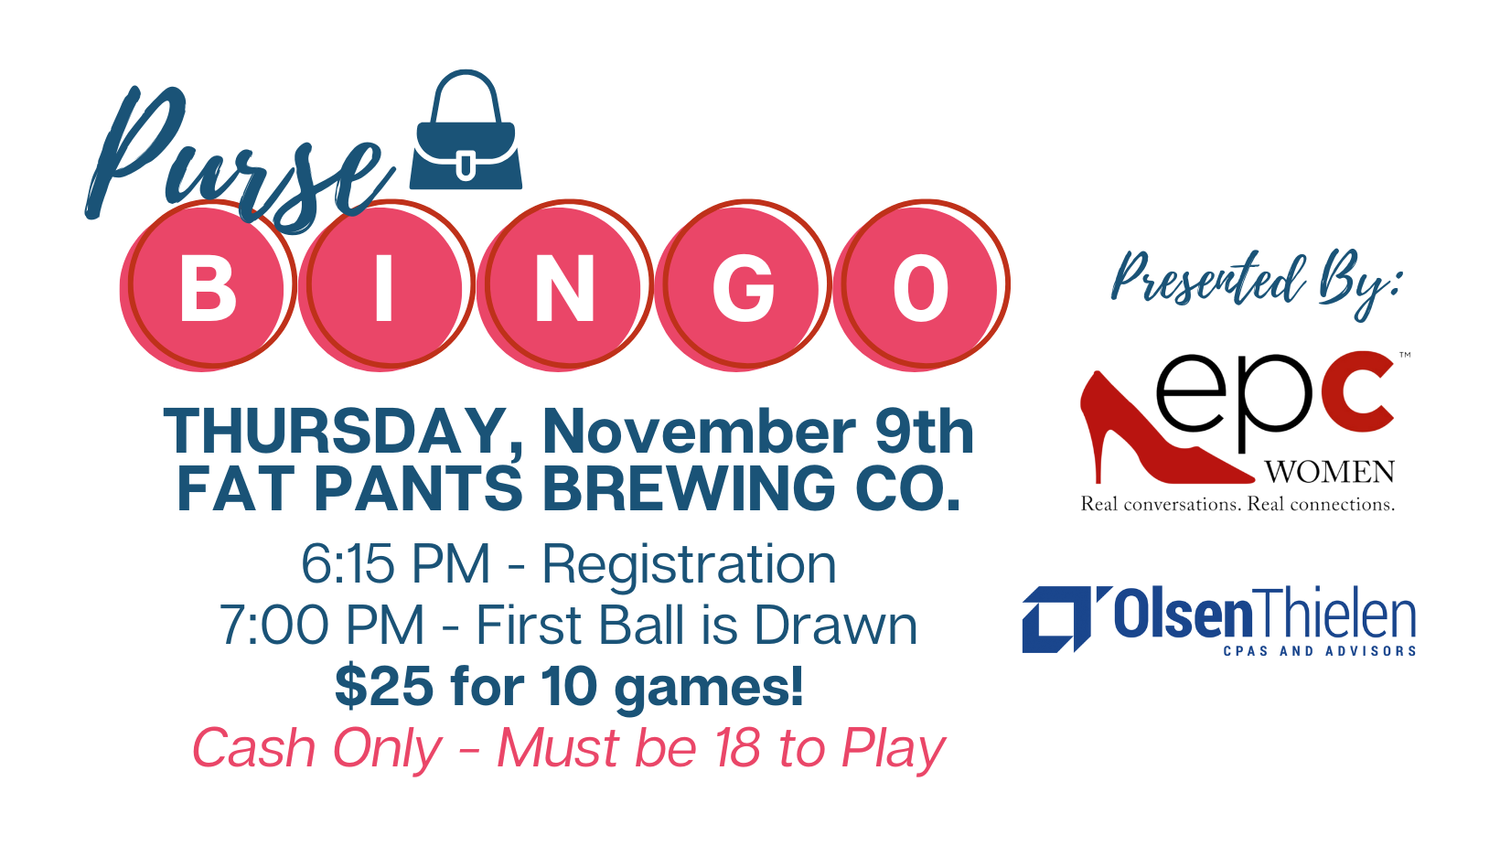 Miss Winona program hosts Designer Purse Bingo Fundraiser, Community